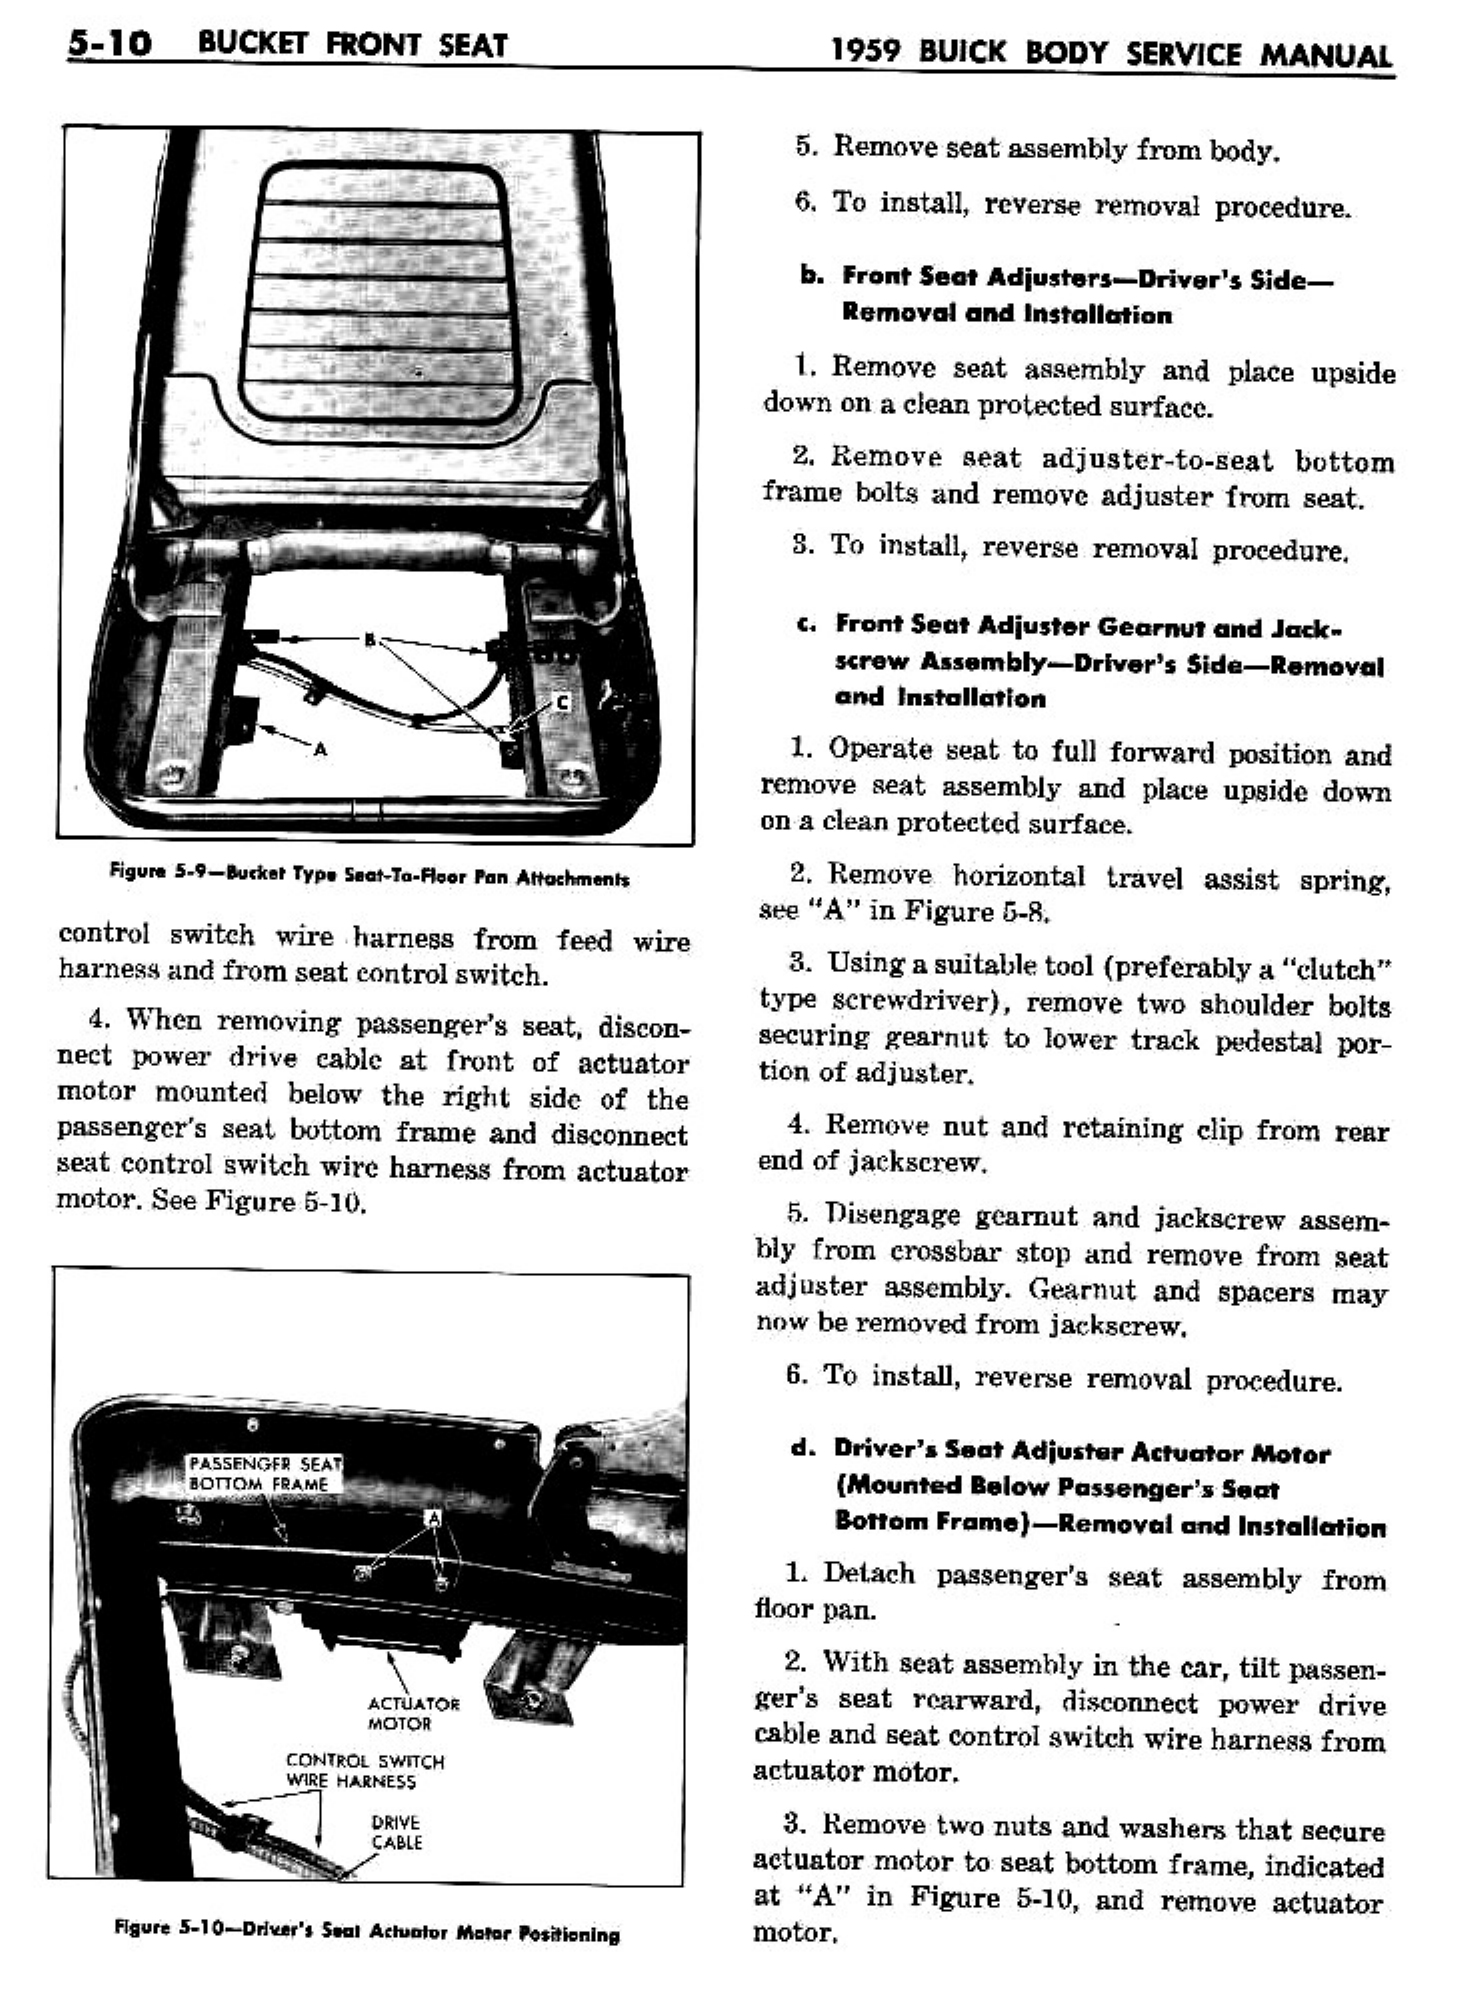 n_06 1959 Buick Body Service-Seats_10.jpg